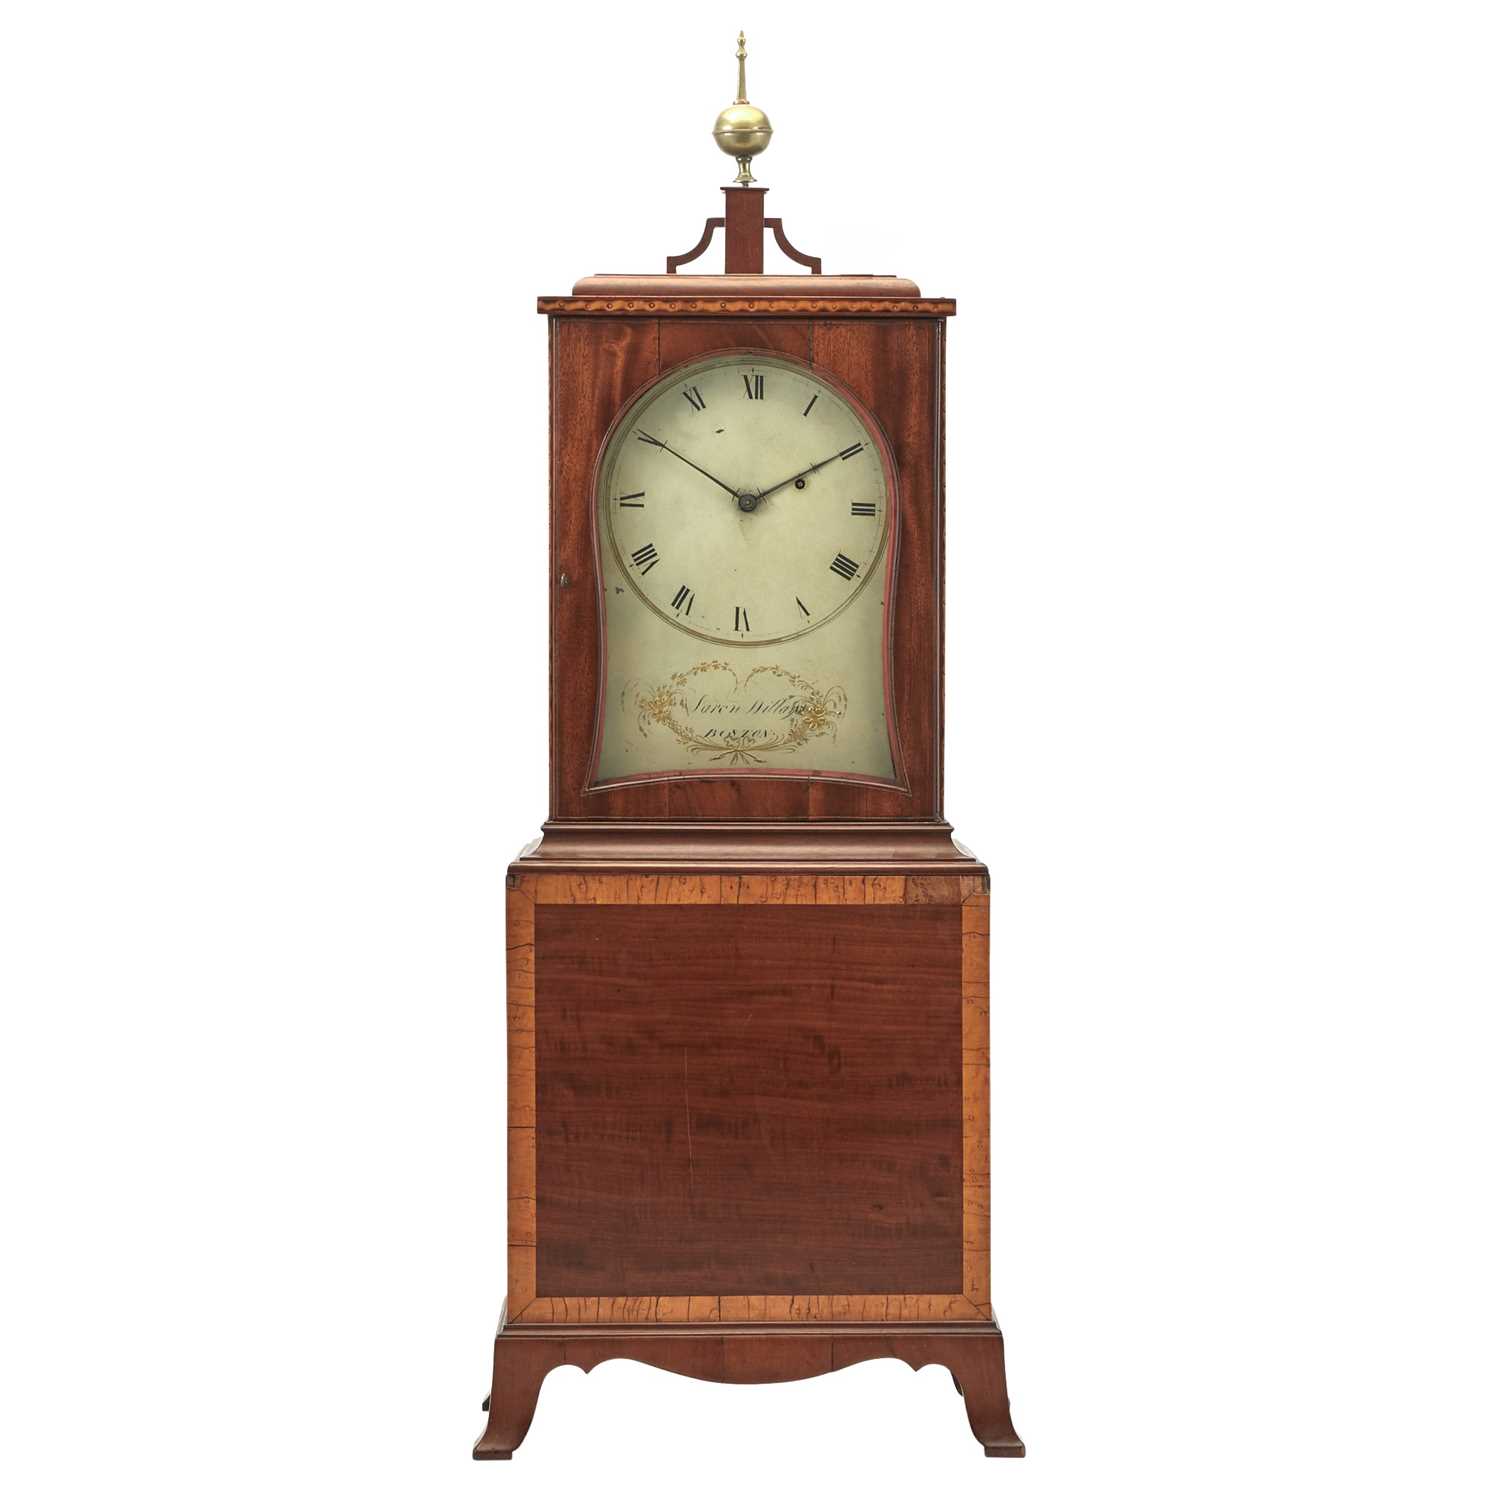 Lot 251 - Federal Inlaid Mahogany Shelf Clock